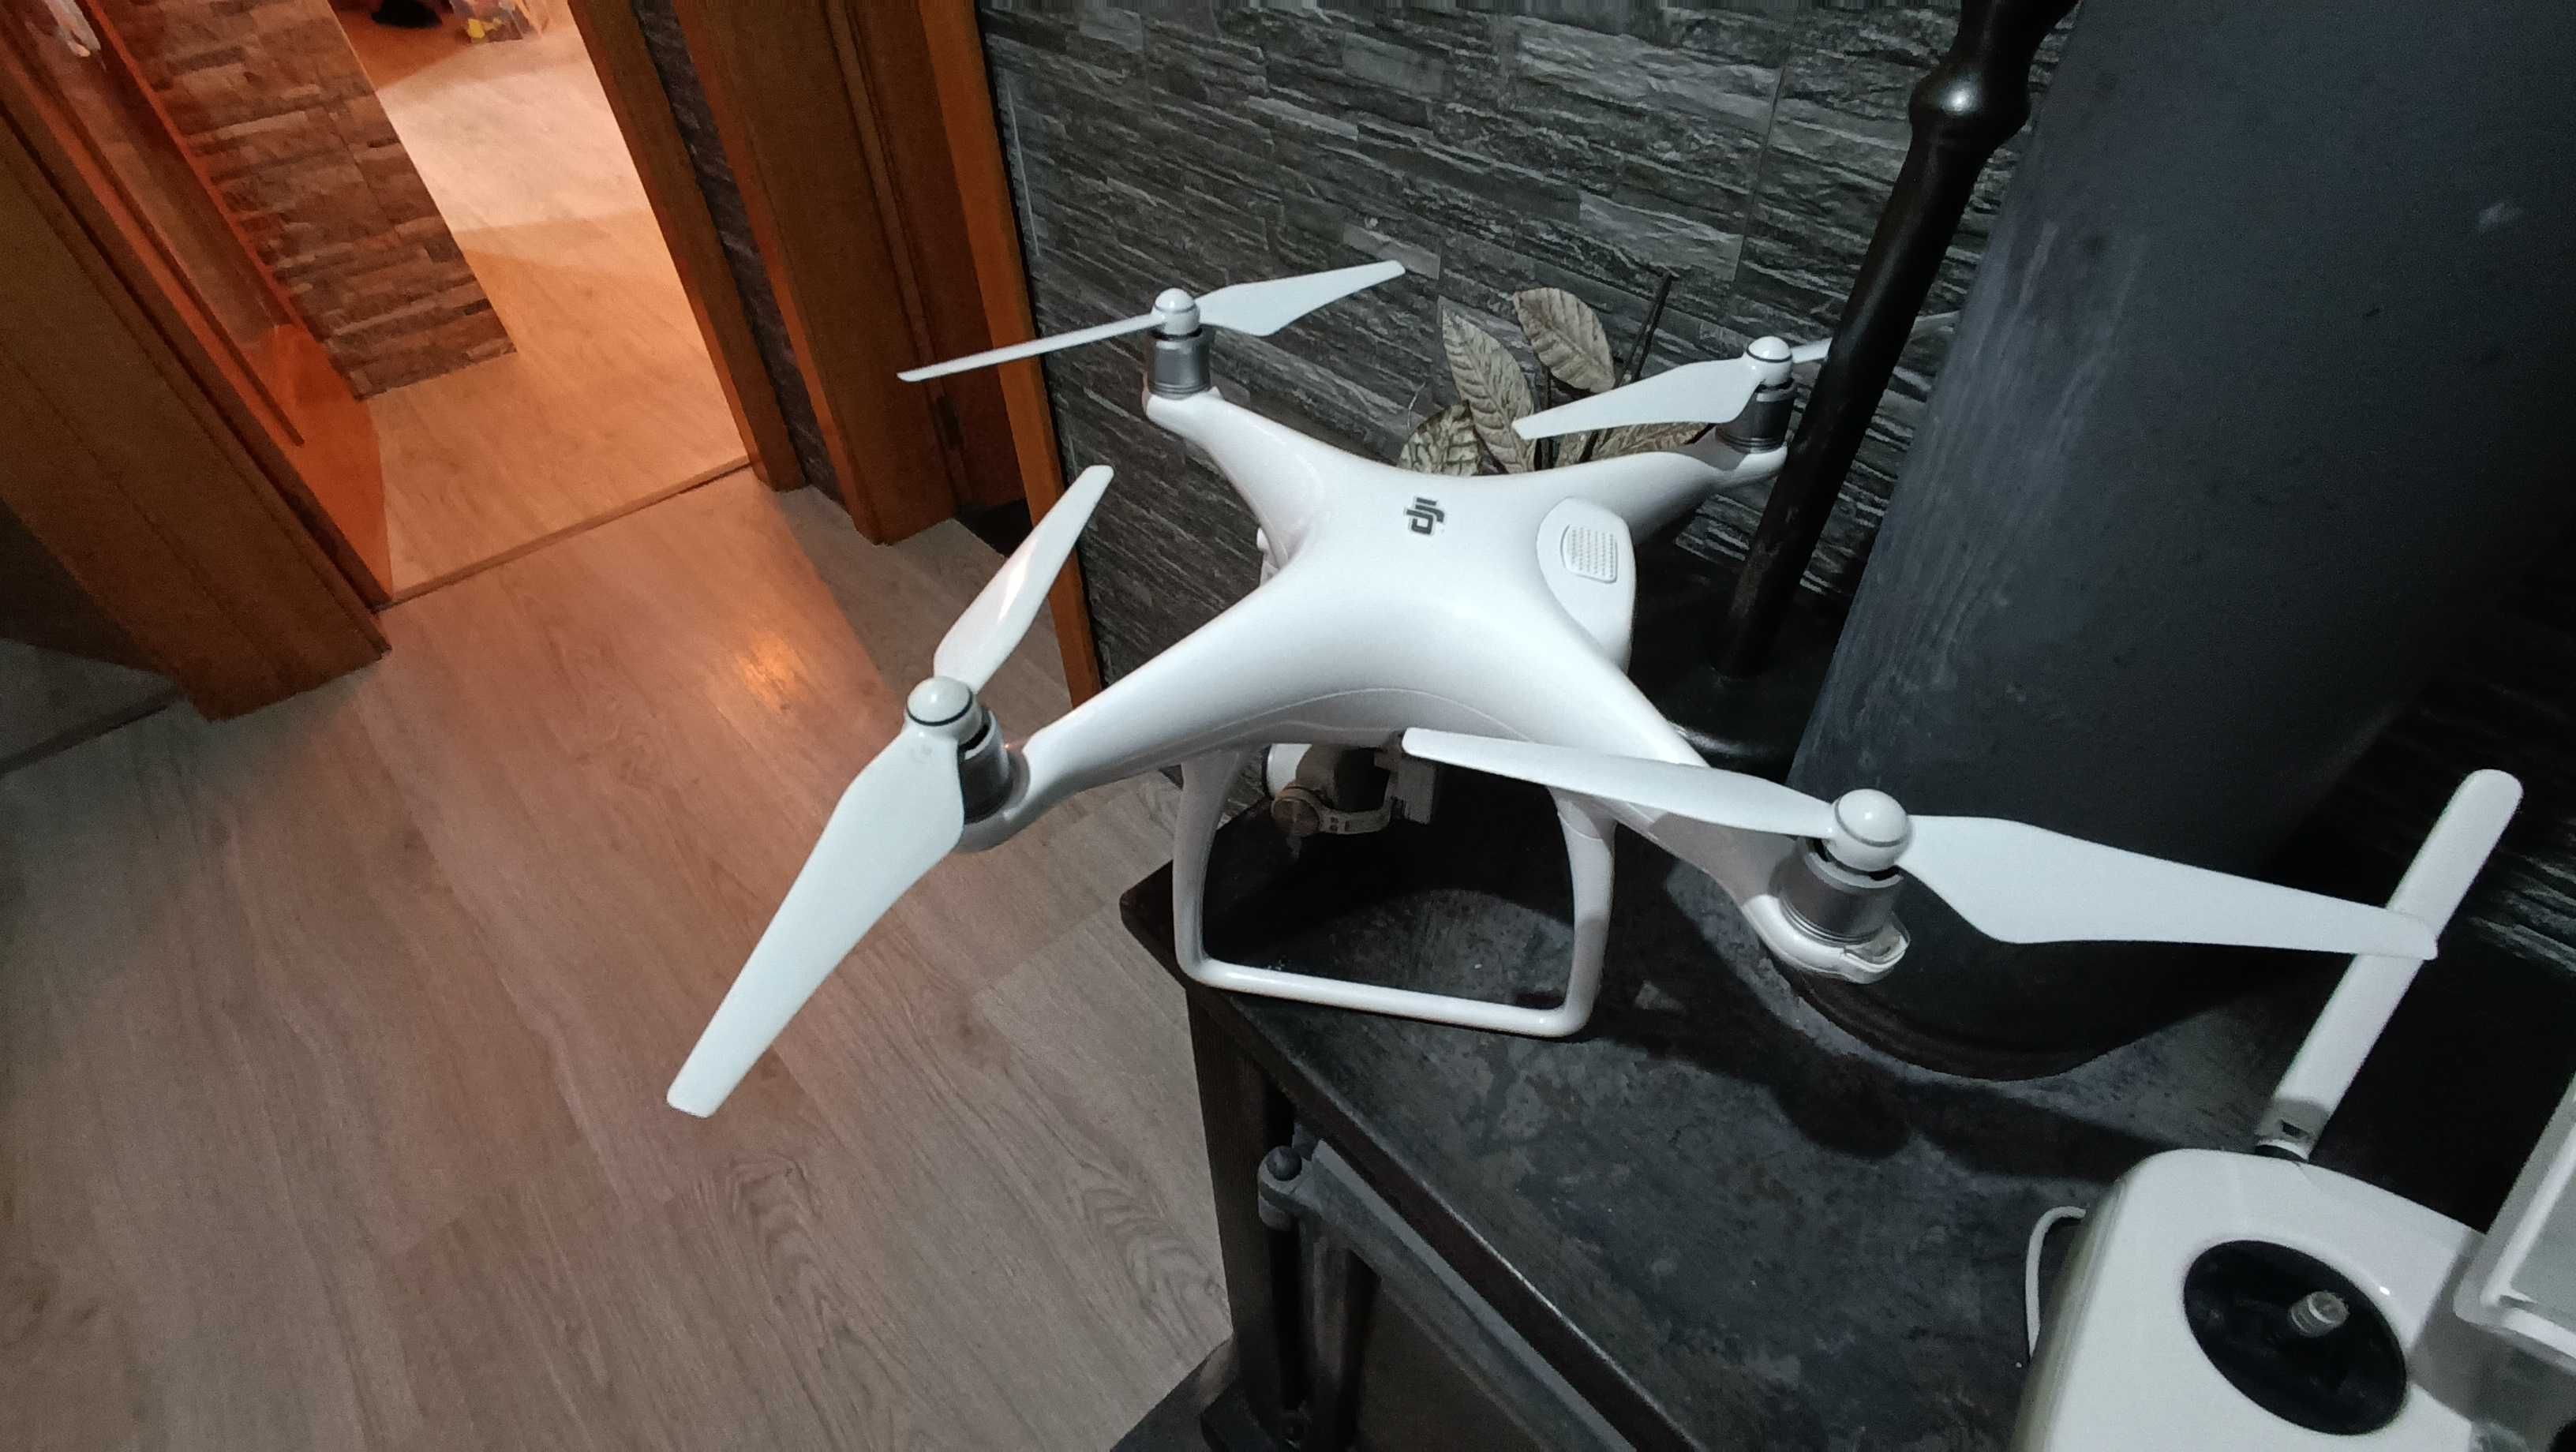 vendo Drone  DJI Phantom 4